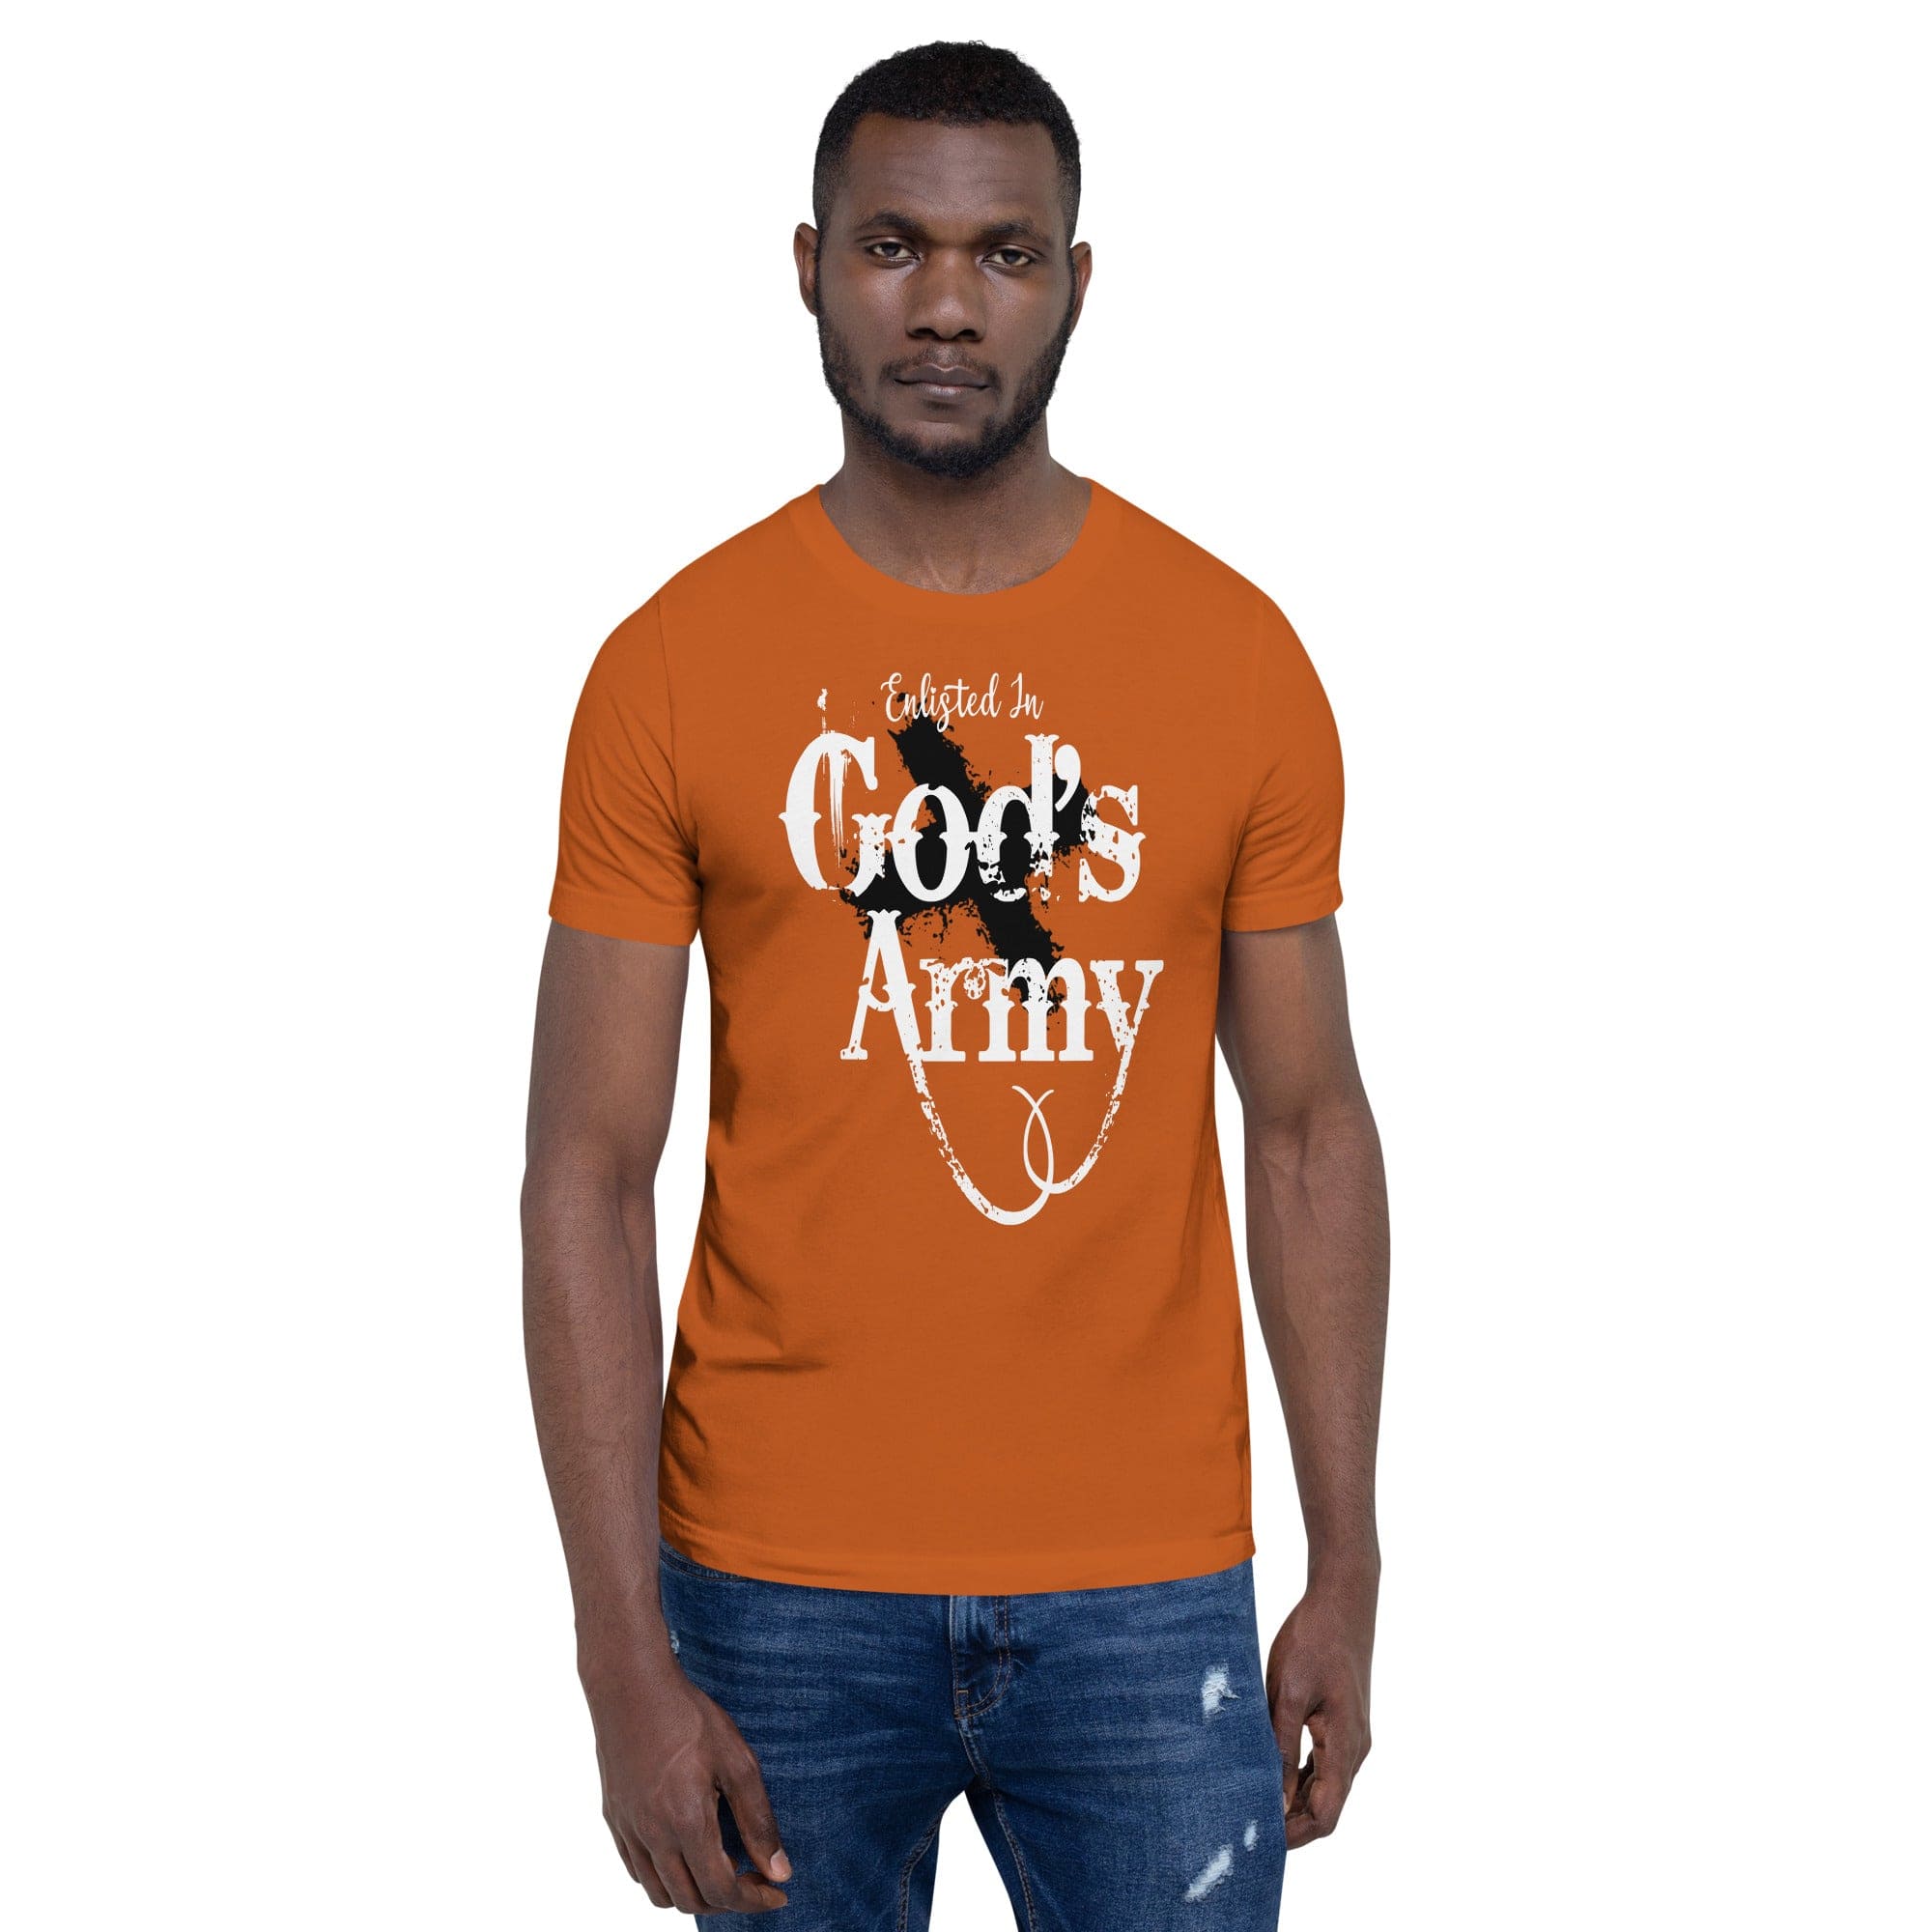 MoneyShot Autumn / S God's Army